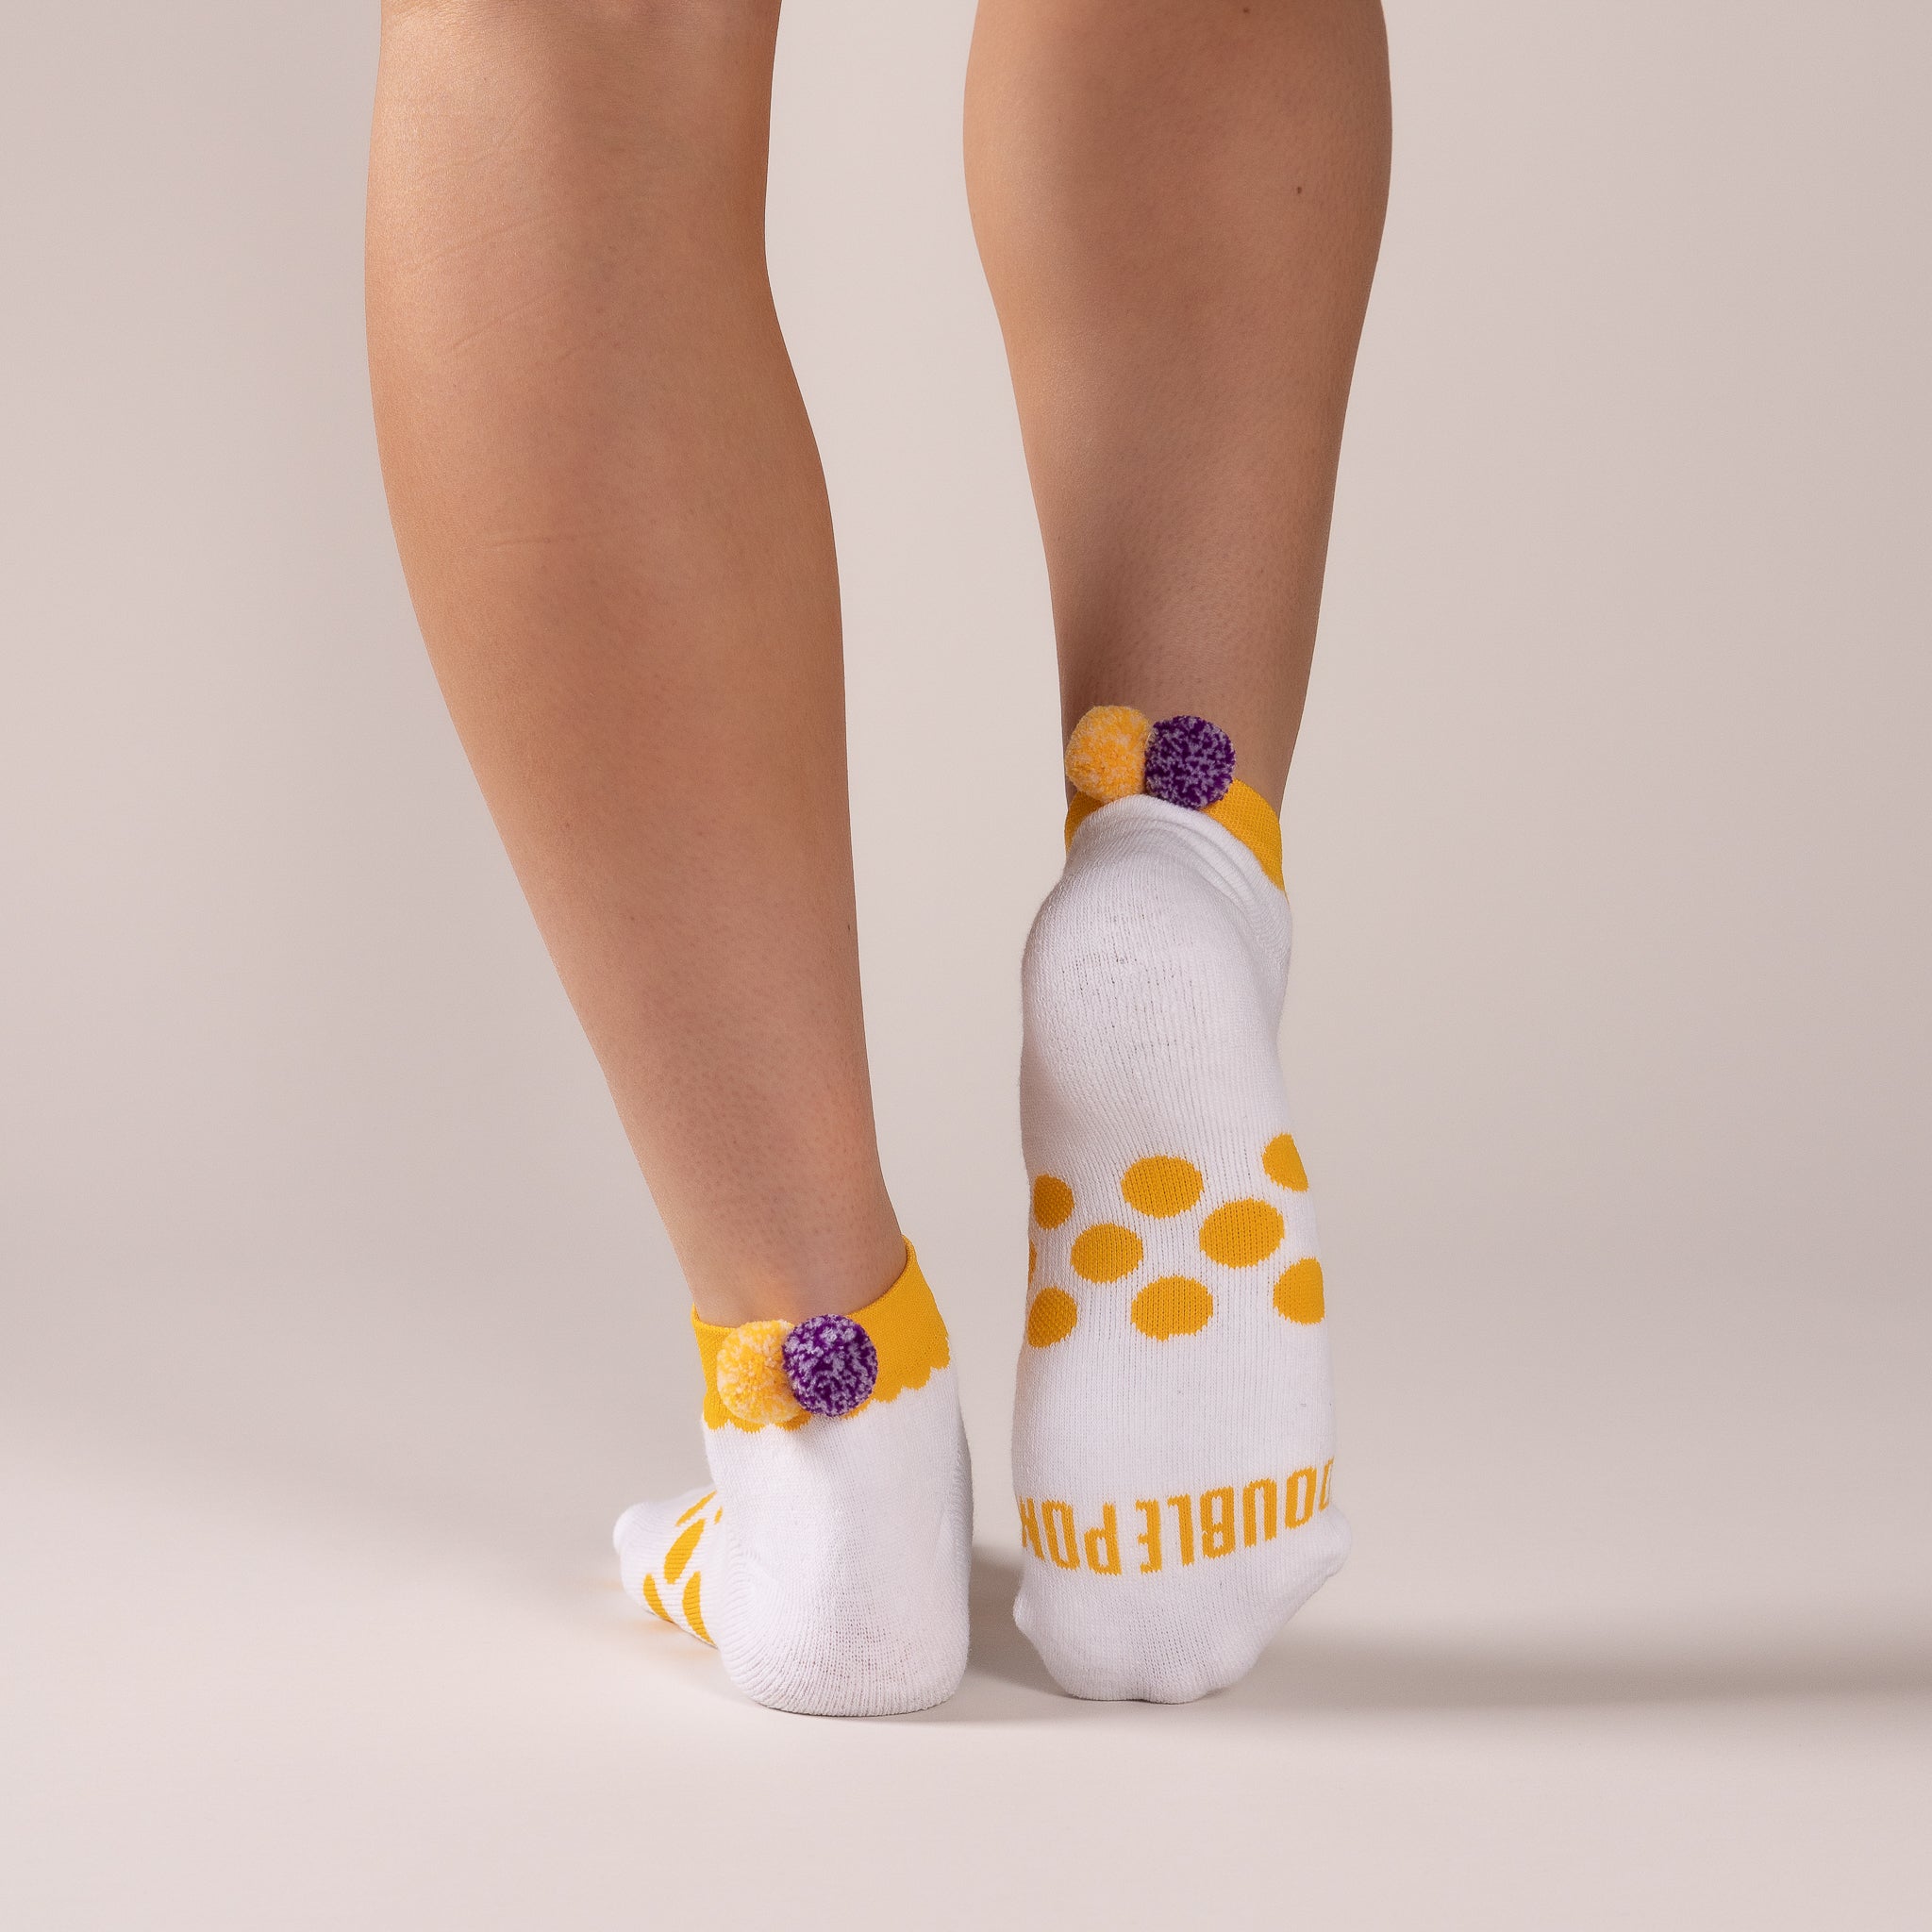 Signature Athletic Ankle Sock w/ Gold Trim and Gold + Purple Confetti Poms